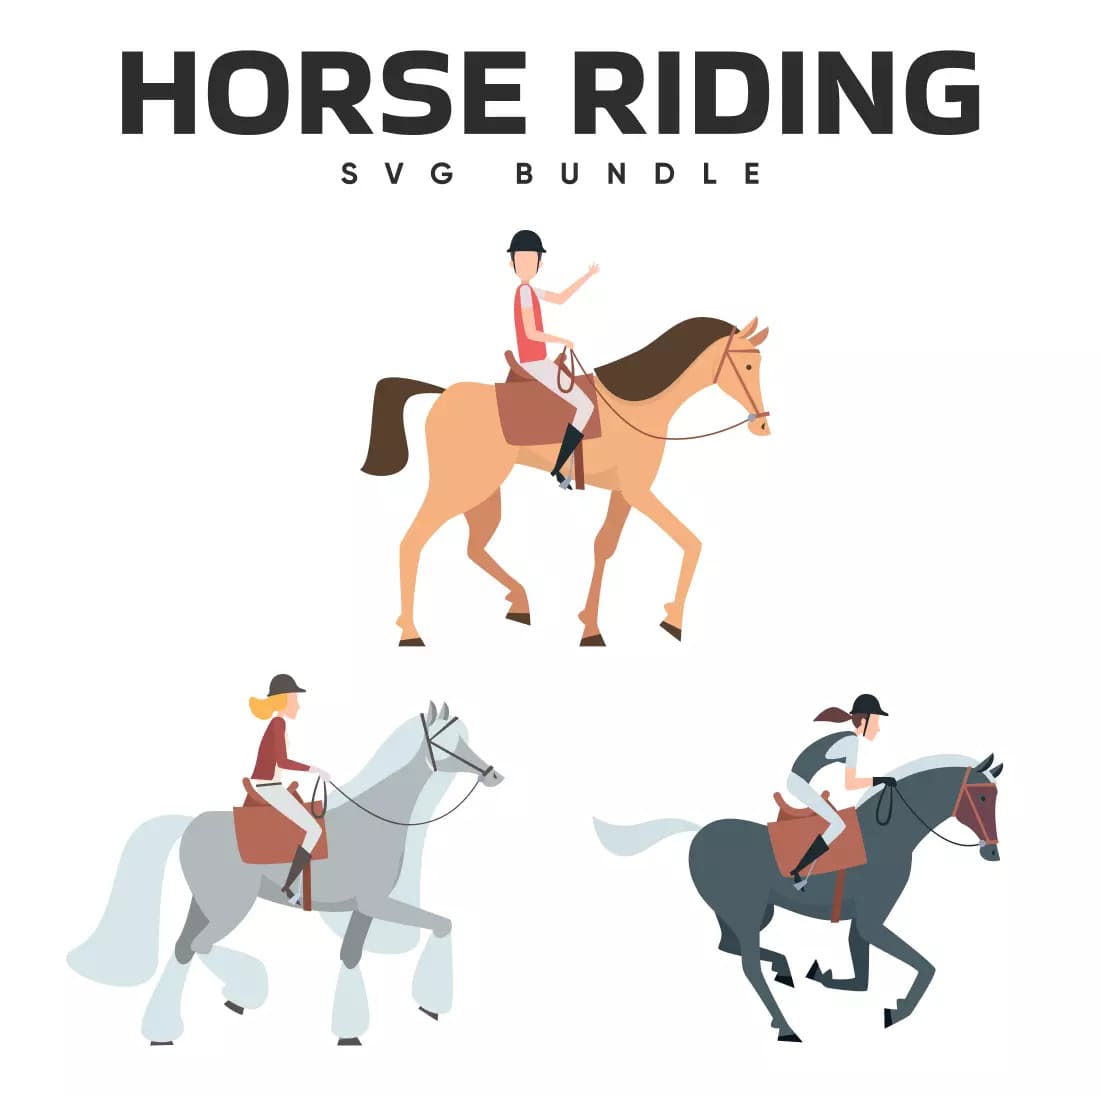 The horse riding svg bundle is shown.